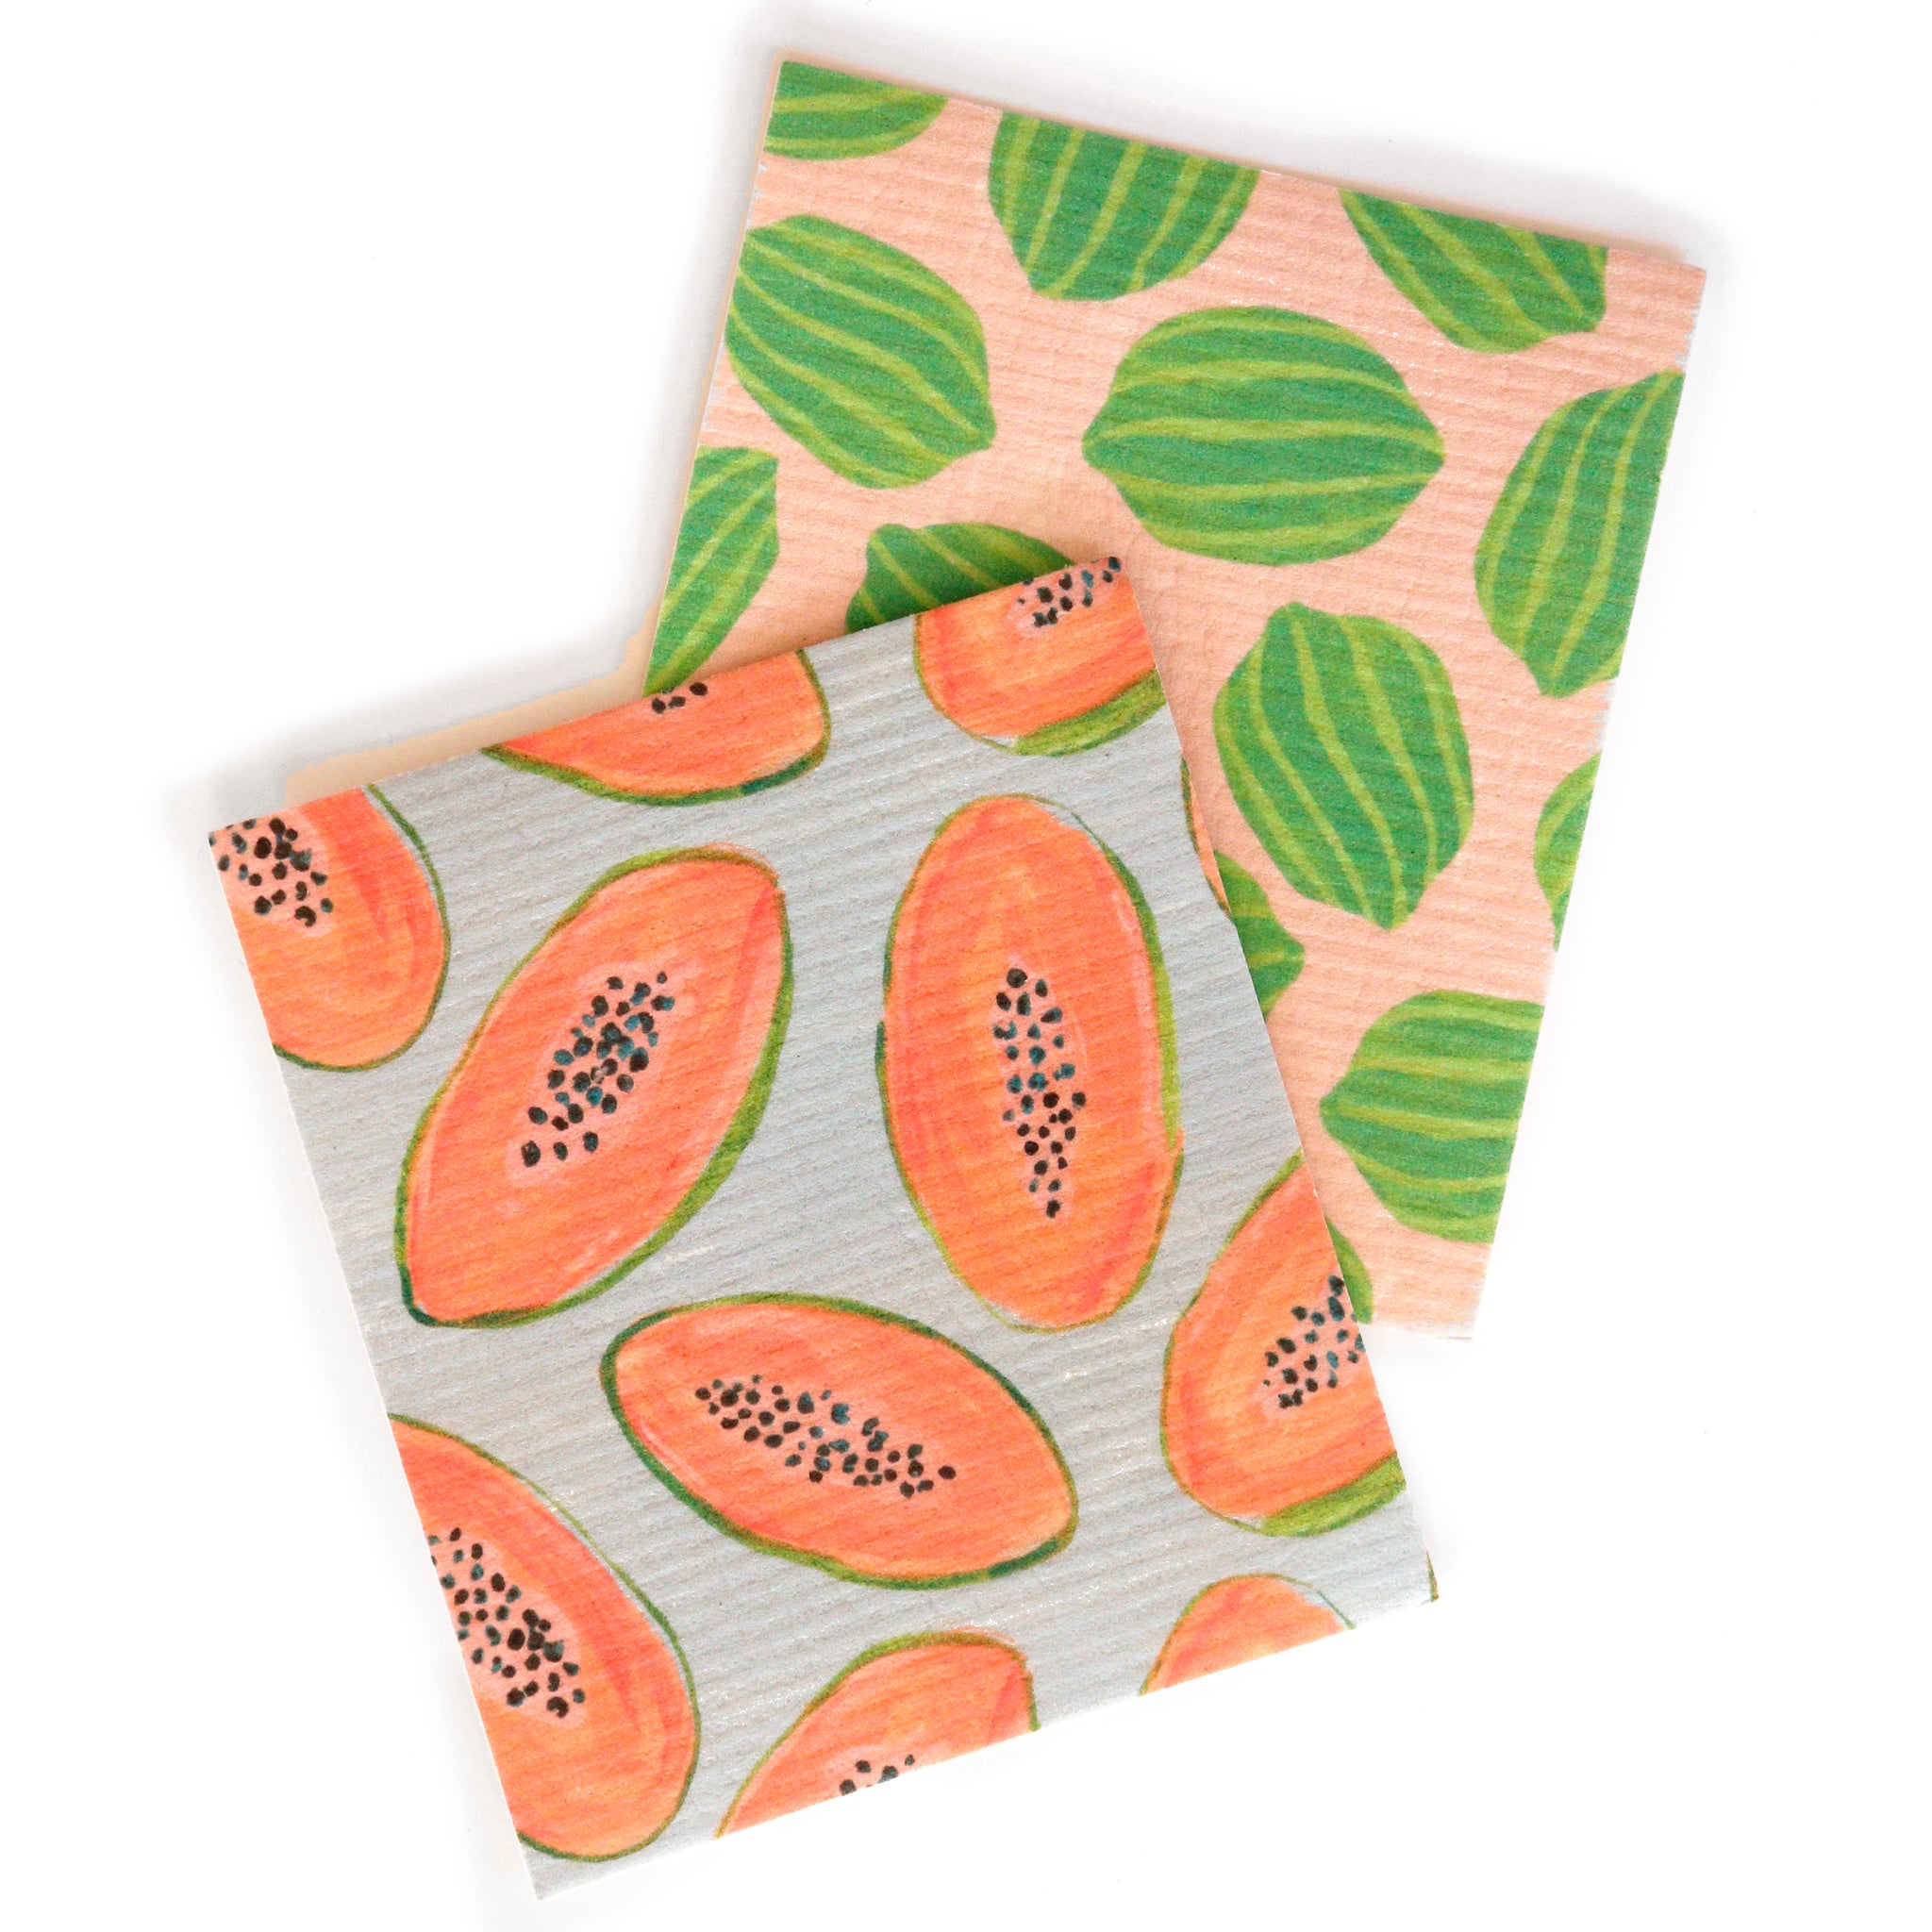 Swedish Dishcloth in Fruit Print, 2-pack